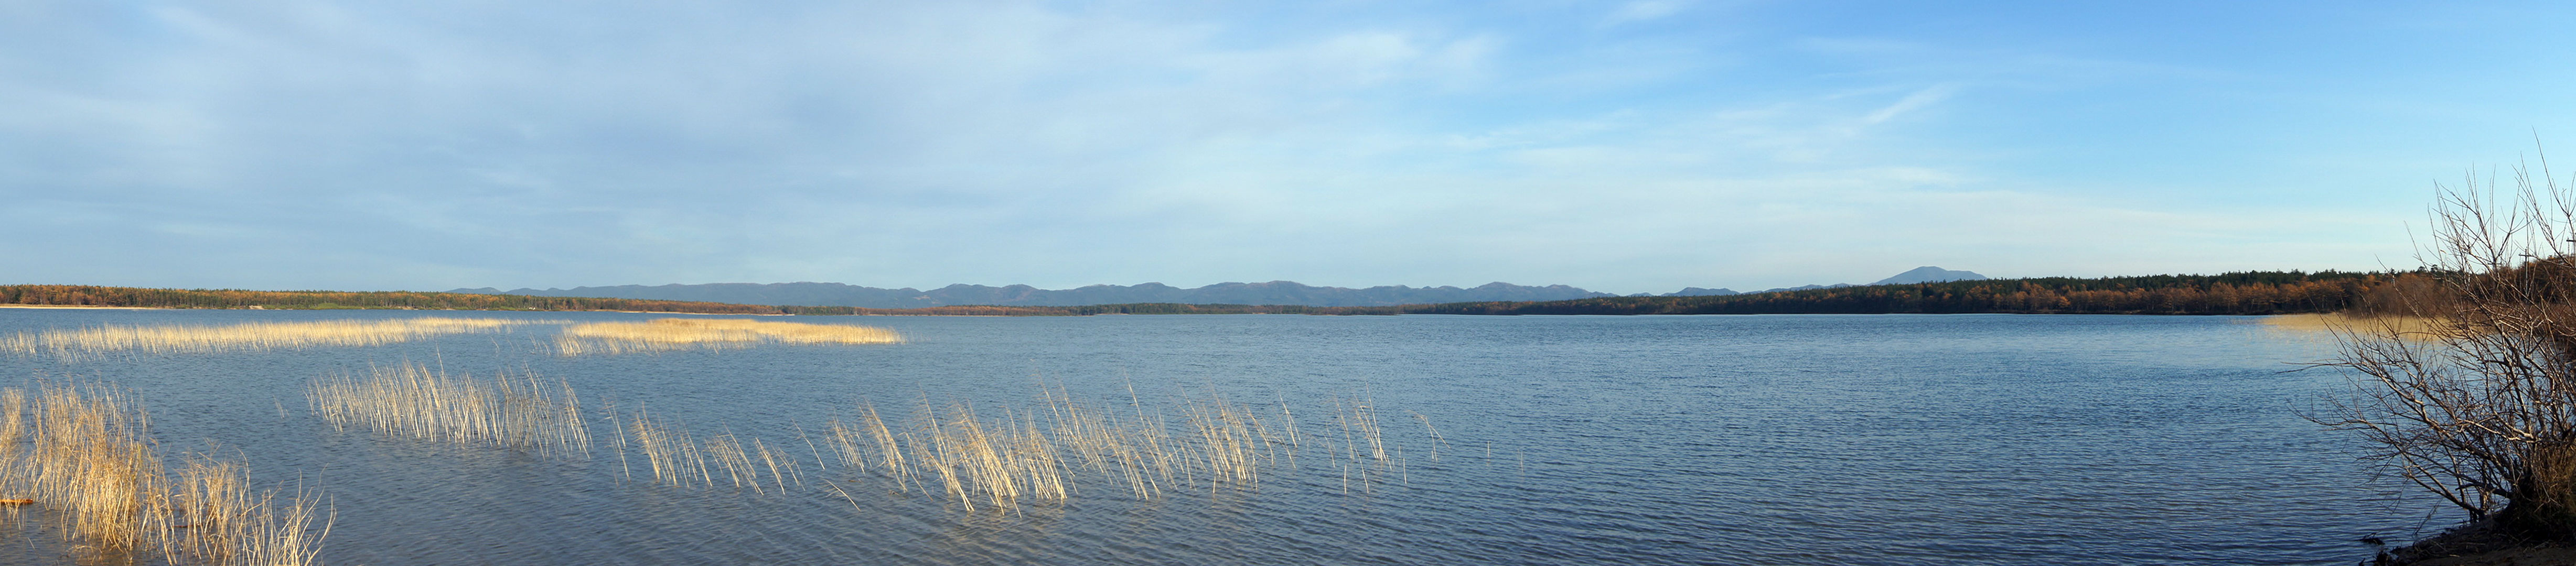 Теплые озера, панорама, октябрь 2013